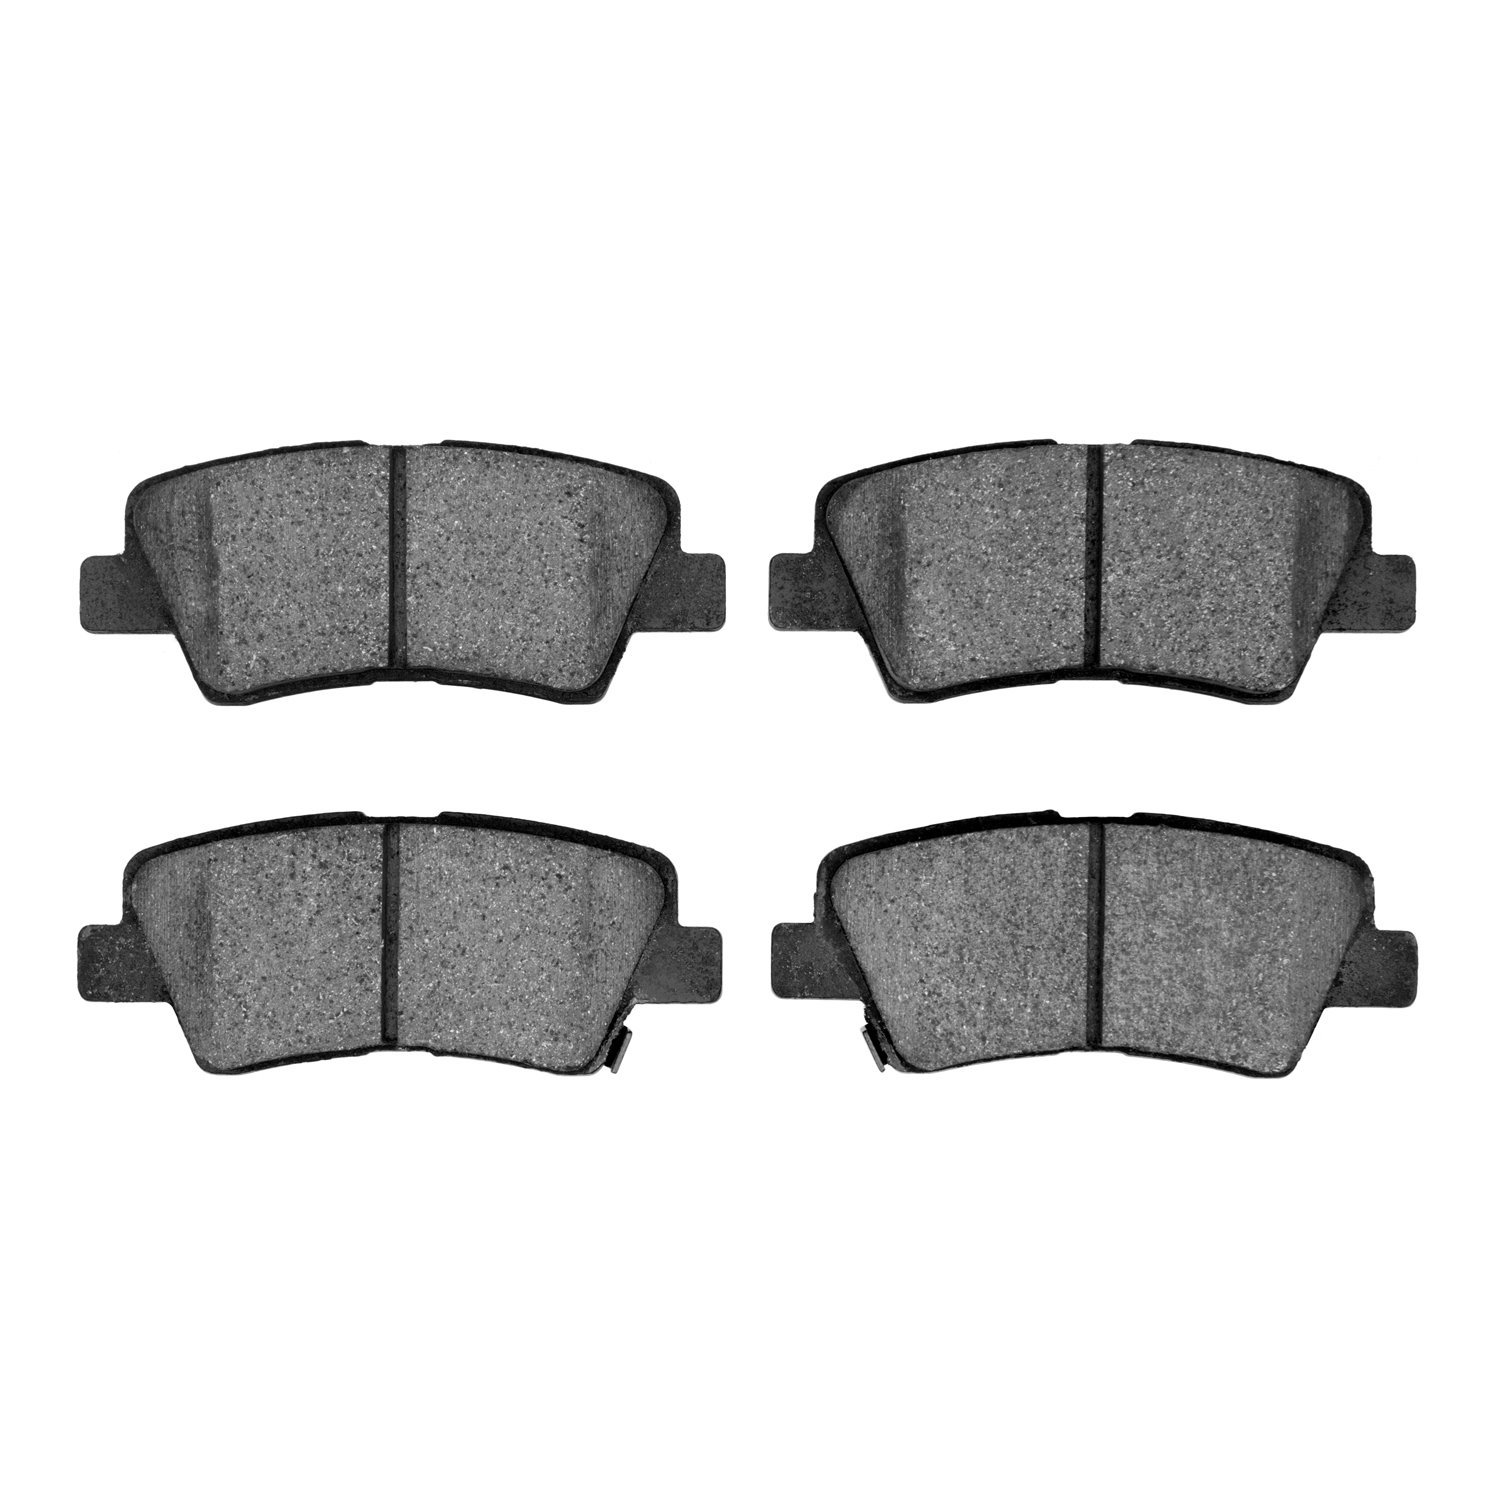 1310-1813-00 3000-Series Ceramic Brake Pads, Fits Select Kia/Hyundai/Genesis, Position: Rear